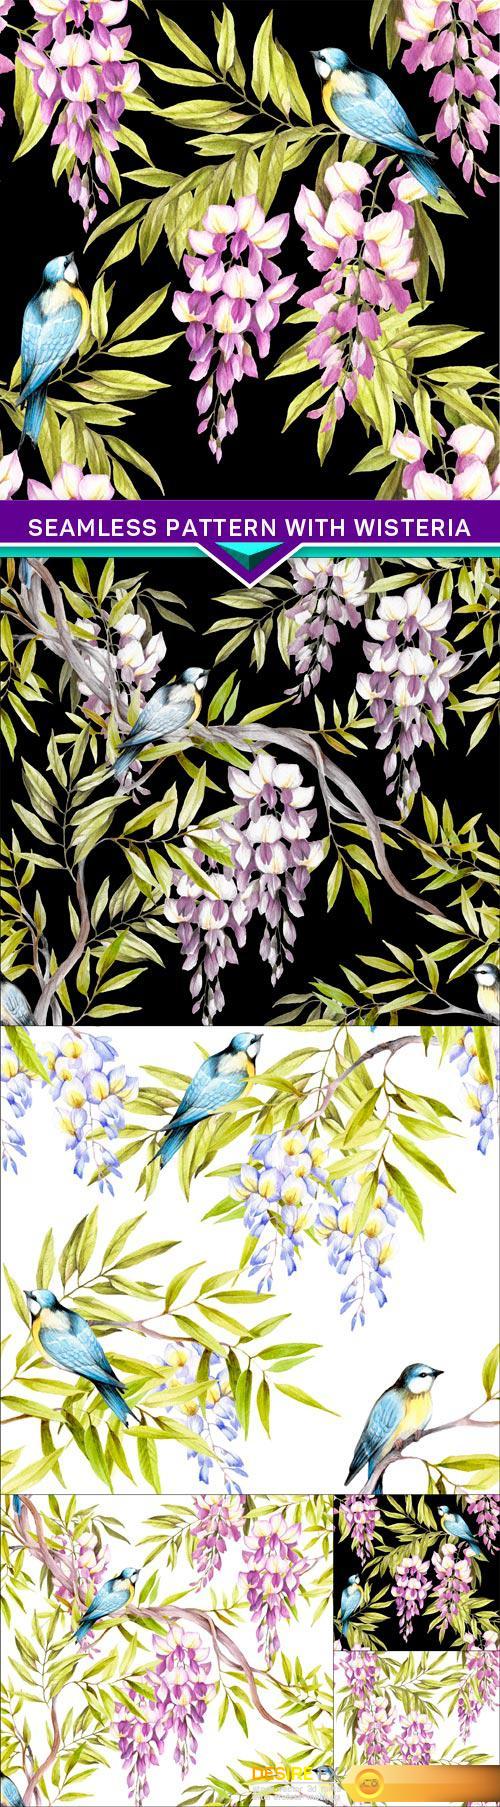 Seamless pattern with wisteria 5X JPEG